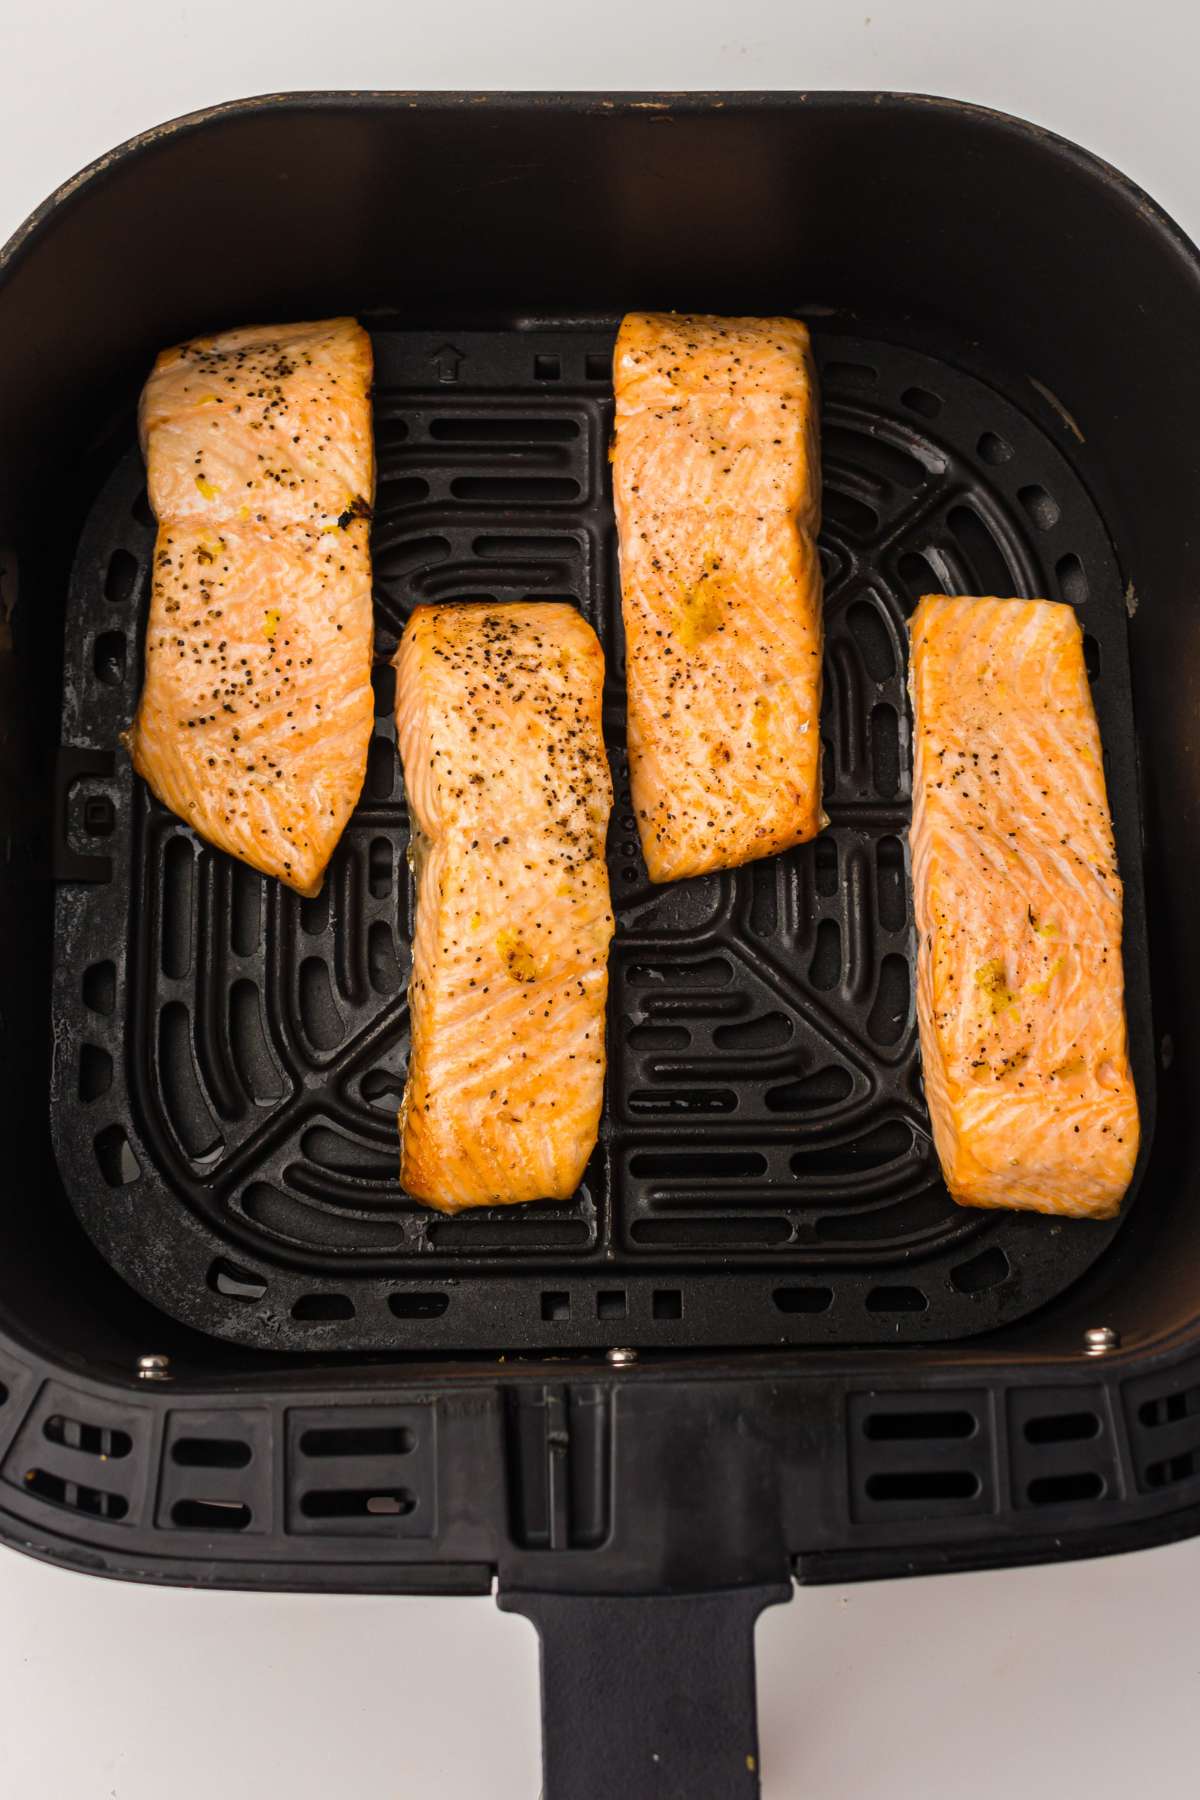 Coked salmon in air fryer basket.